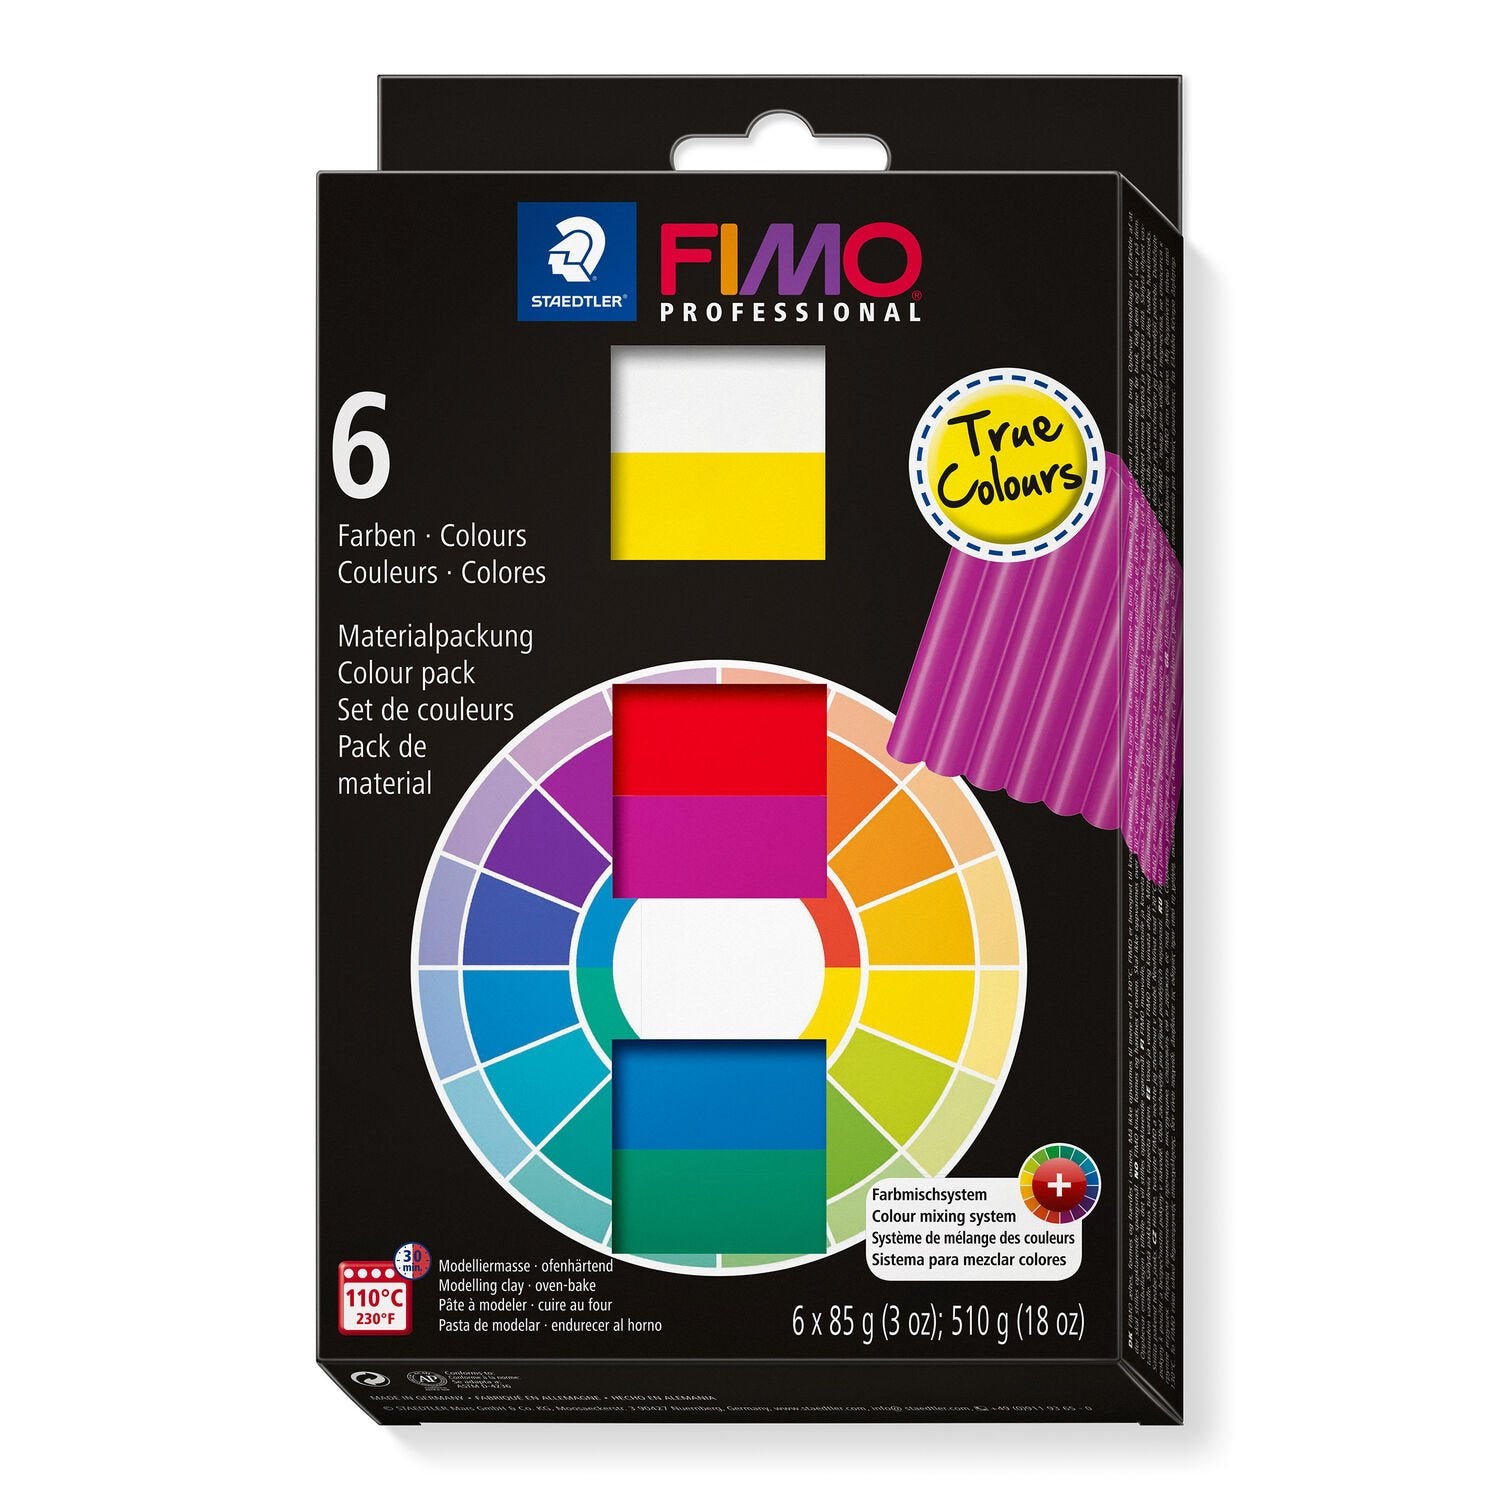 Fimo Professional True Colours 6 Pack Includes 6 x 85 g Blocks includes White, True Yellow, TrueRed,True Magenta, True Blue, True Green